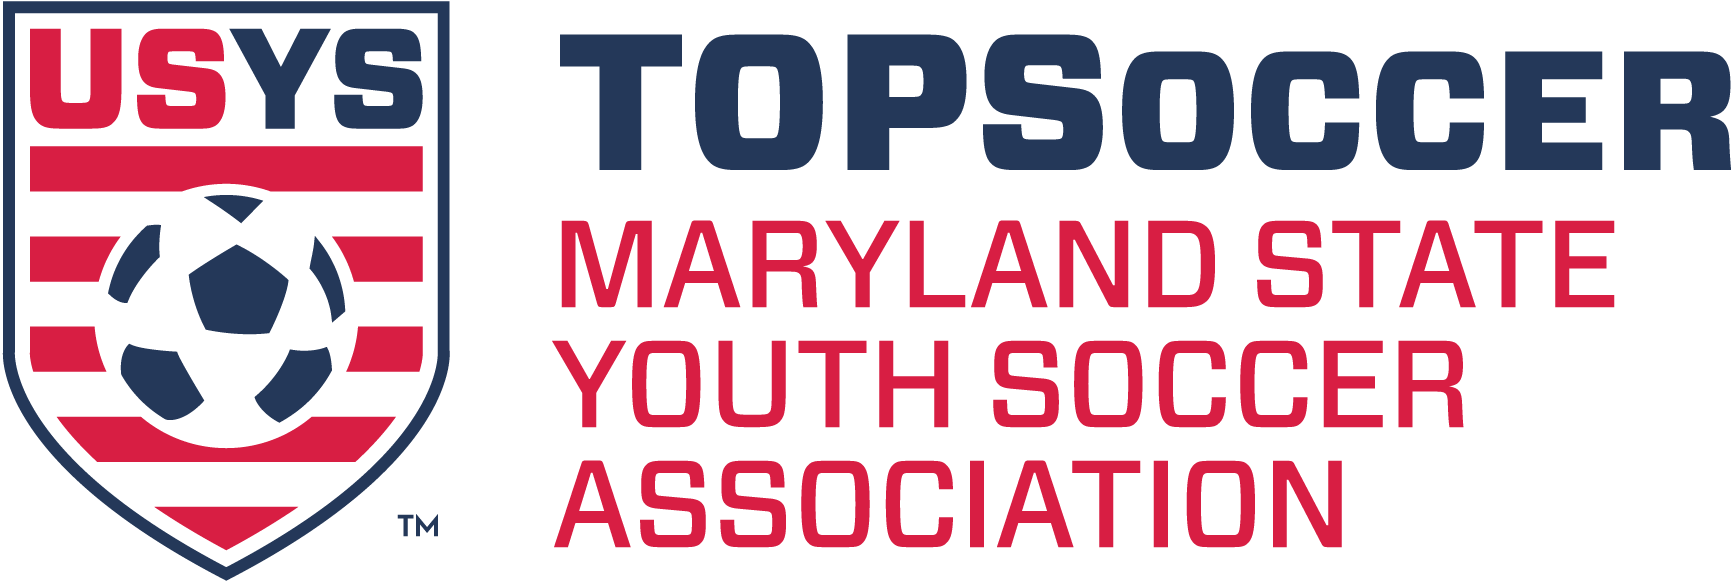 USYS_TOPS_Maryland-state-YSA_Horiz_TM_RGB_WBG